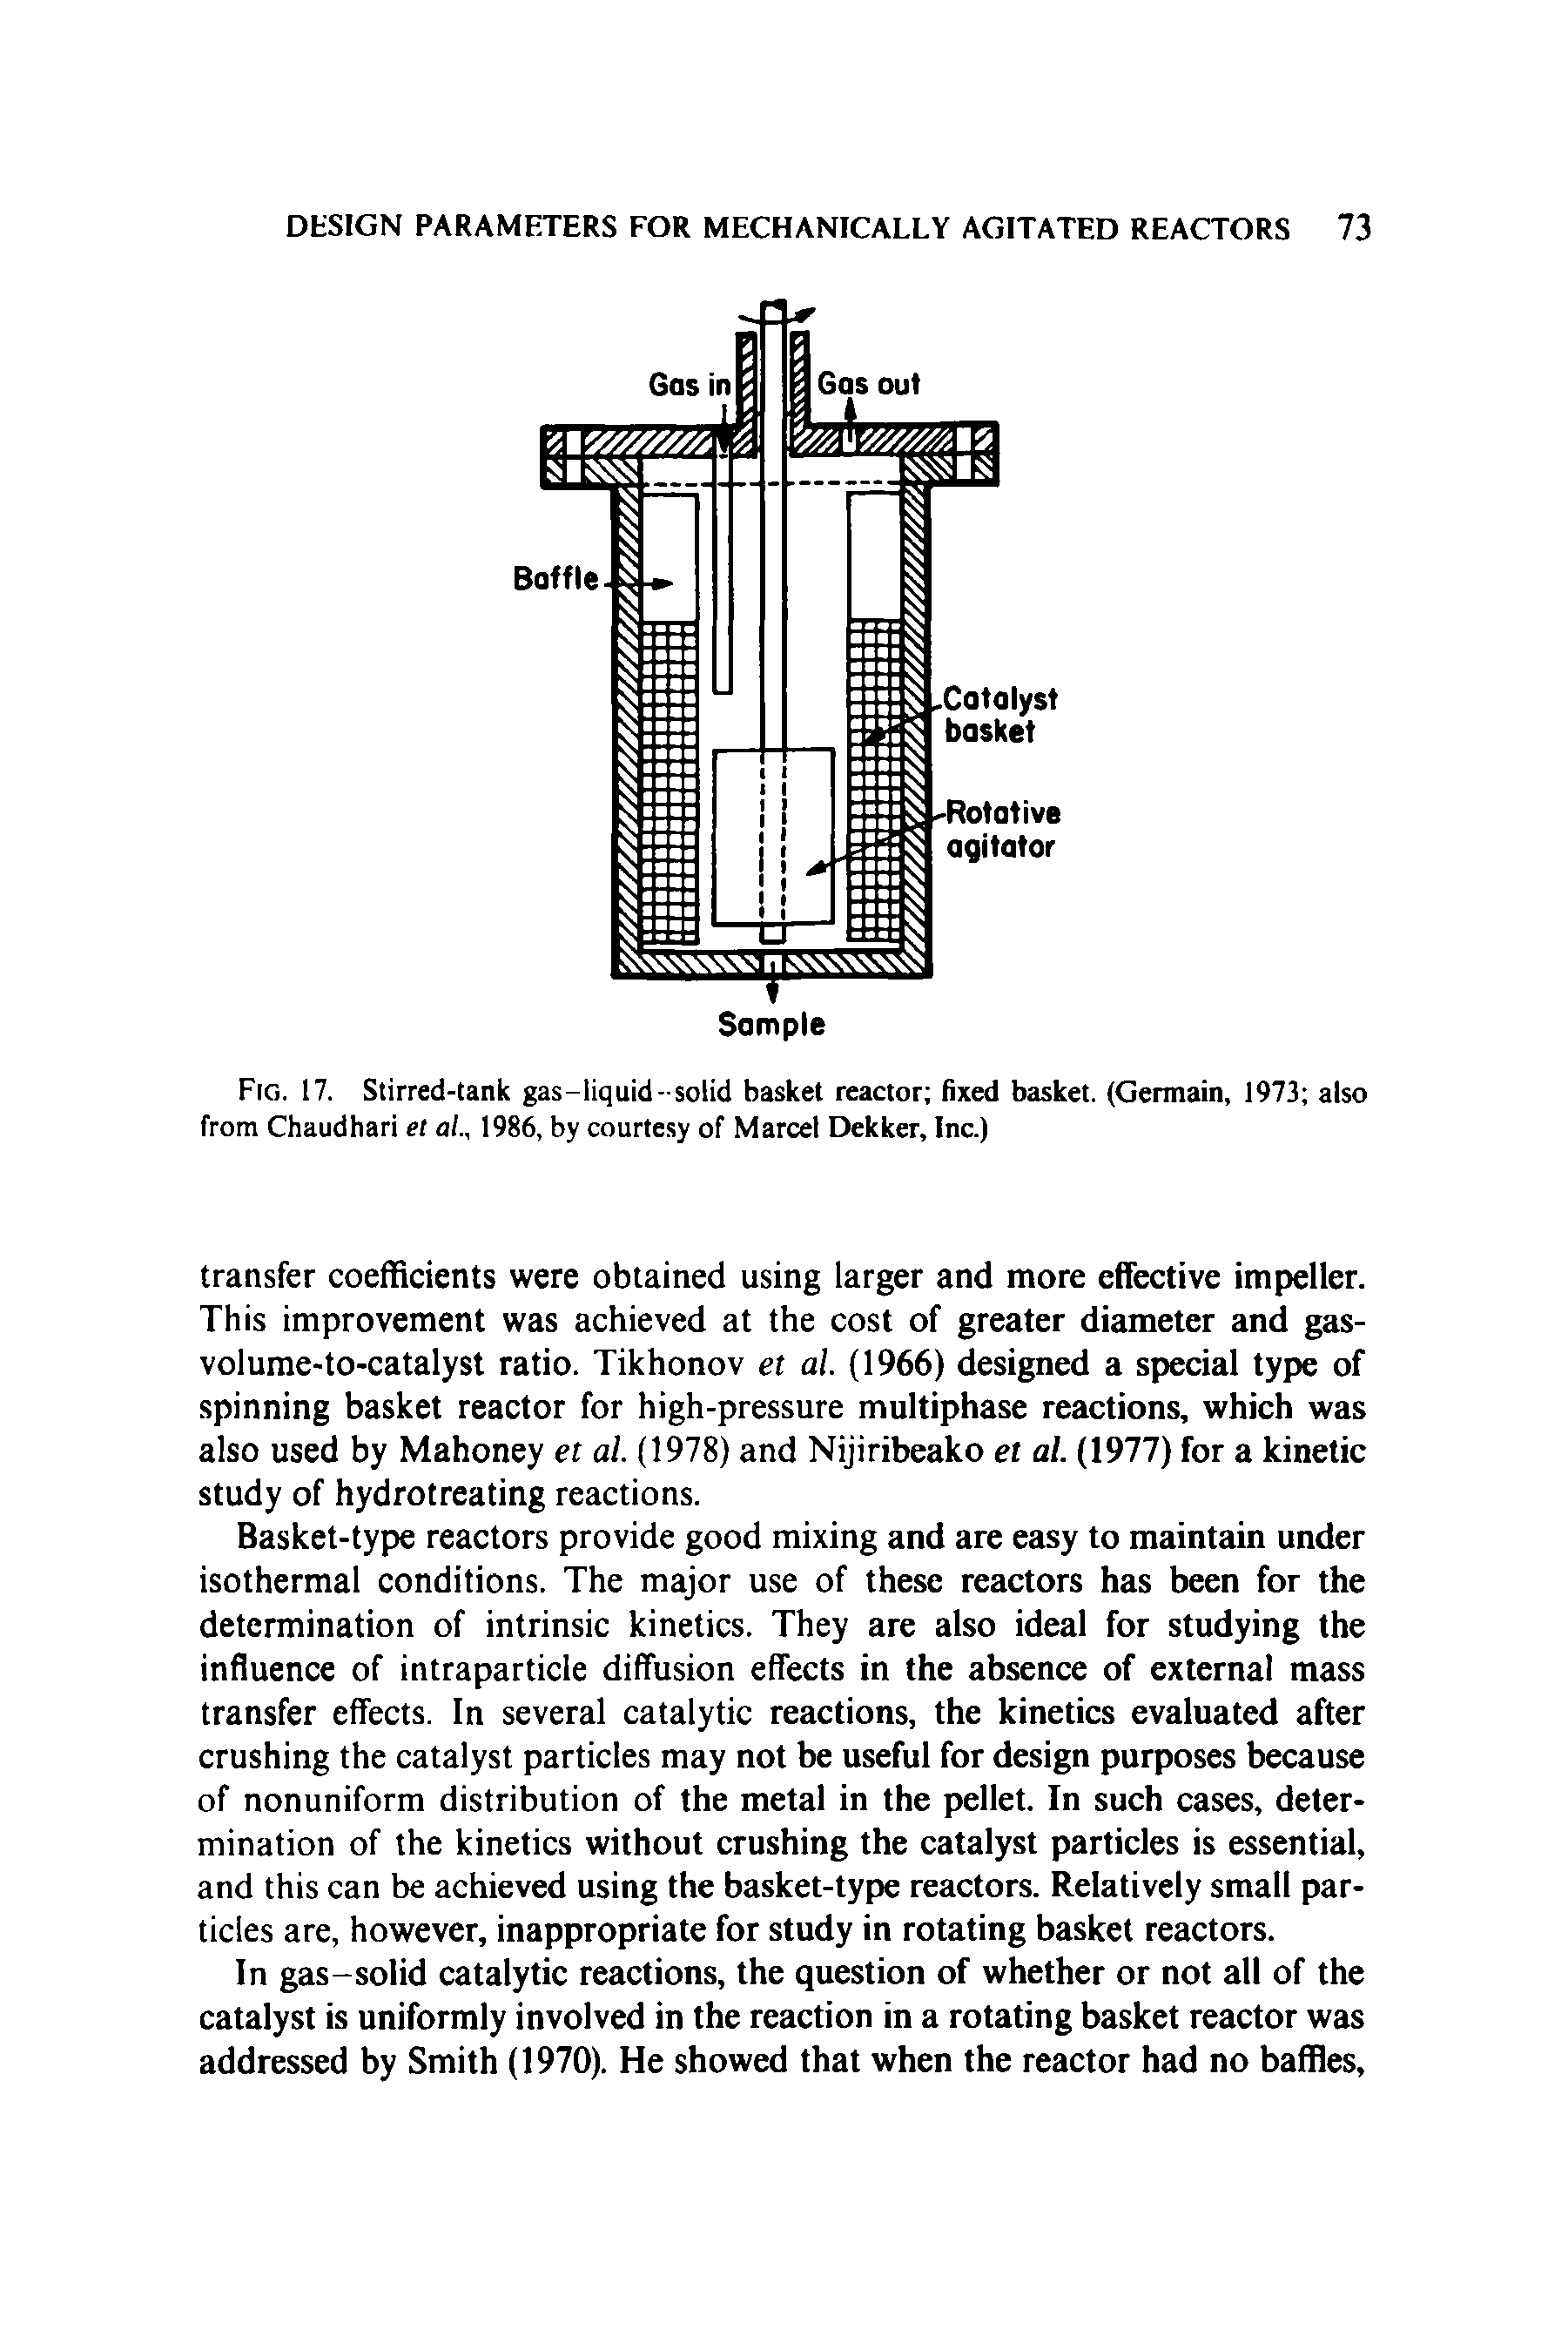 Fig. 17. Stirred-tank gas-liquid-solid basket reactor fixed basket. (Germain, 1973 also from Chaudhari et al., 1986, by courtesy of Marcel Dekker, Inc.)...